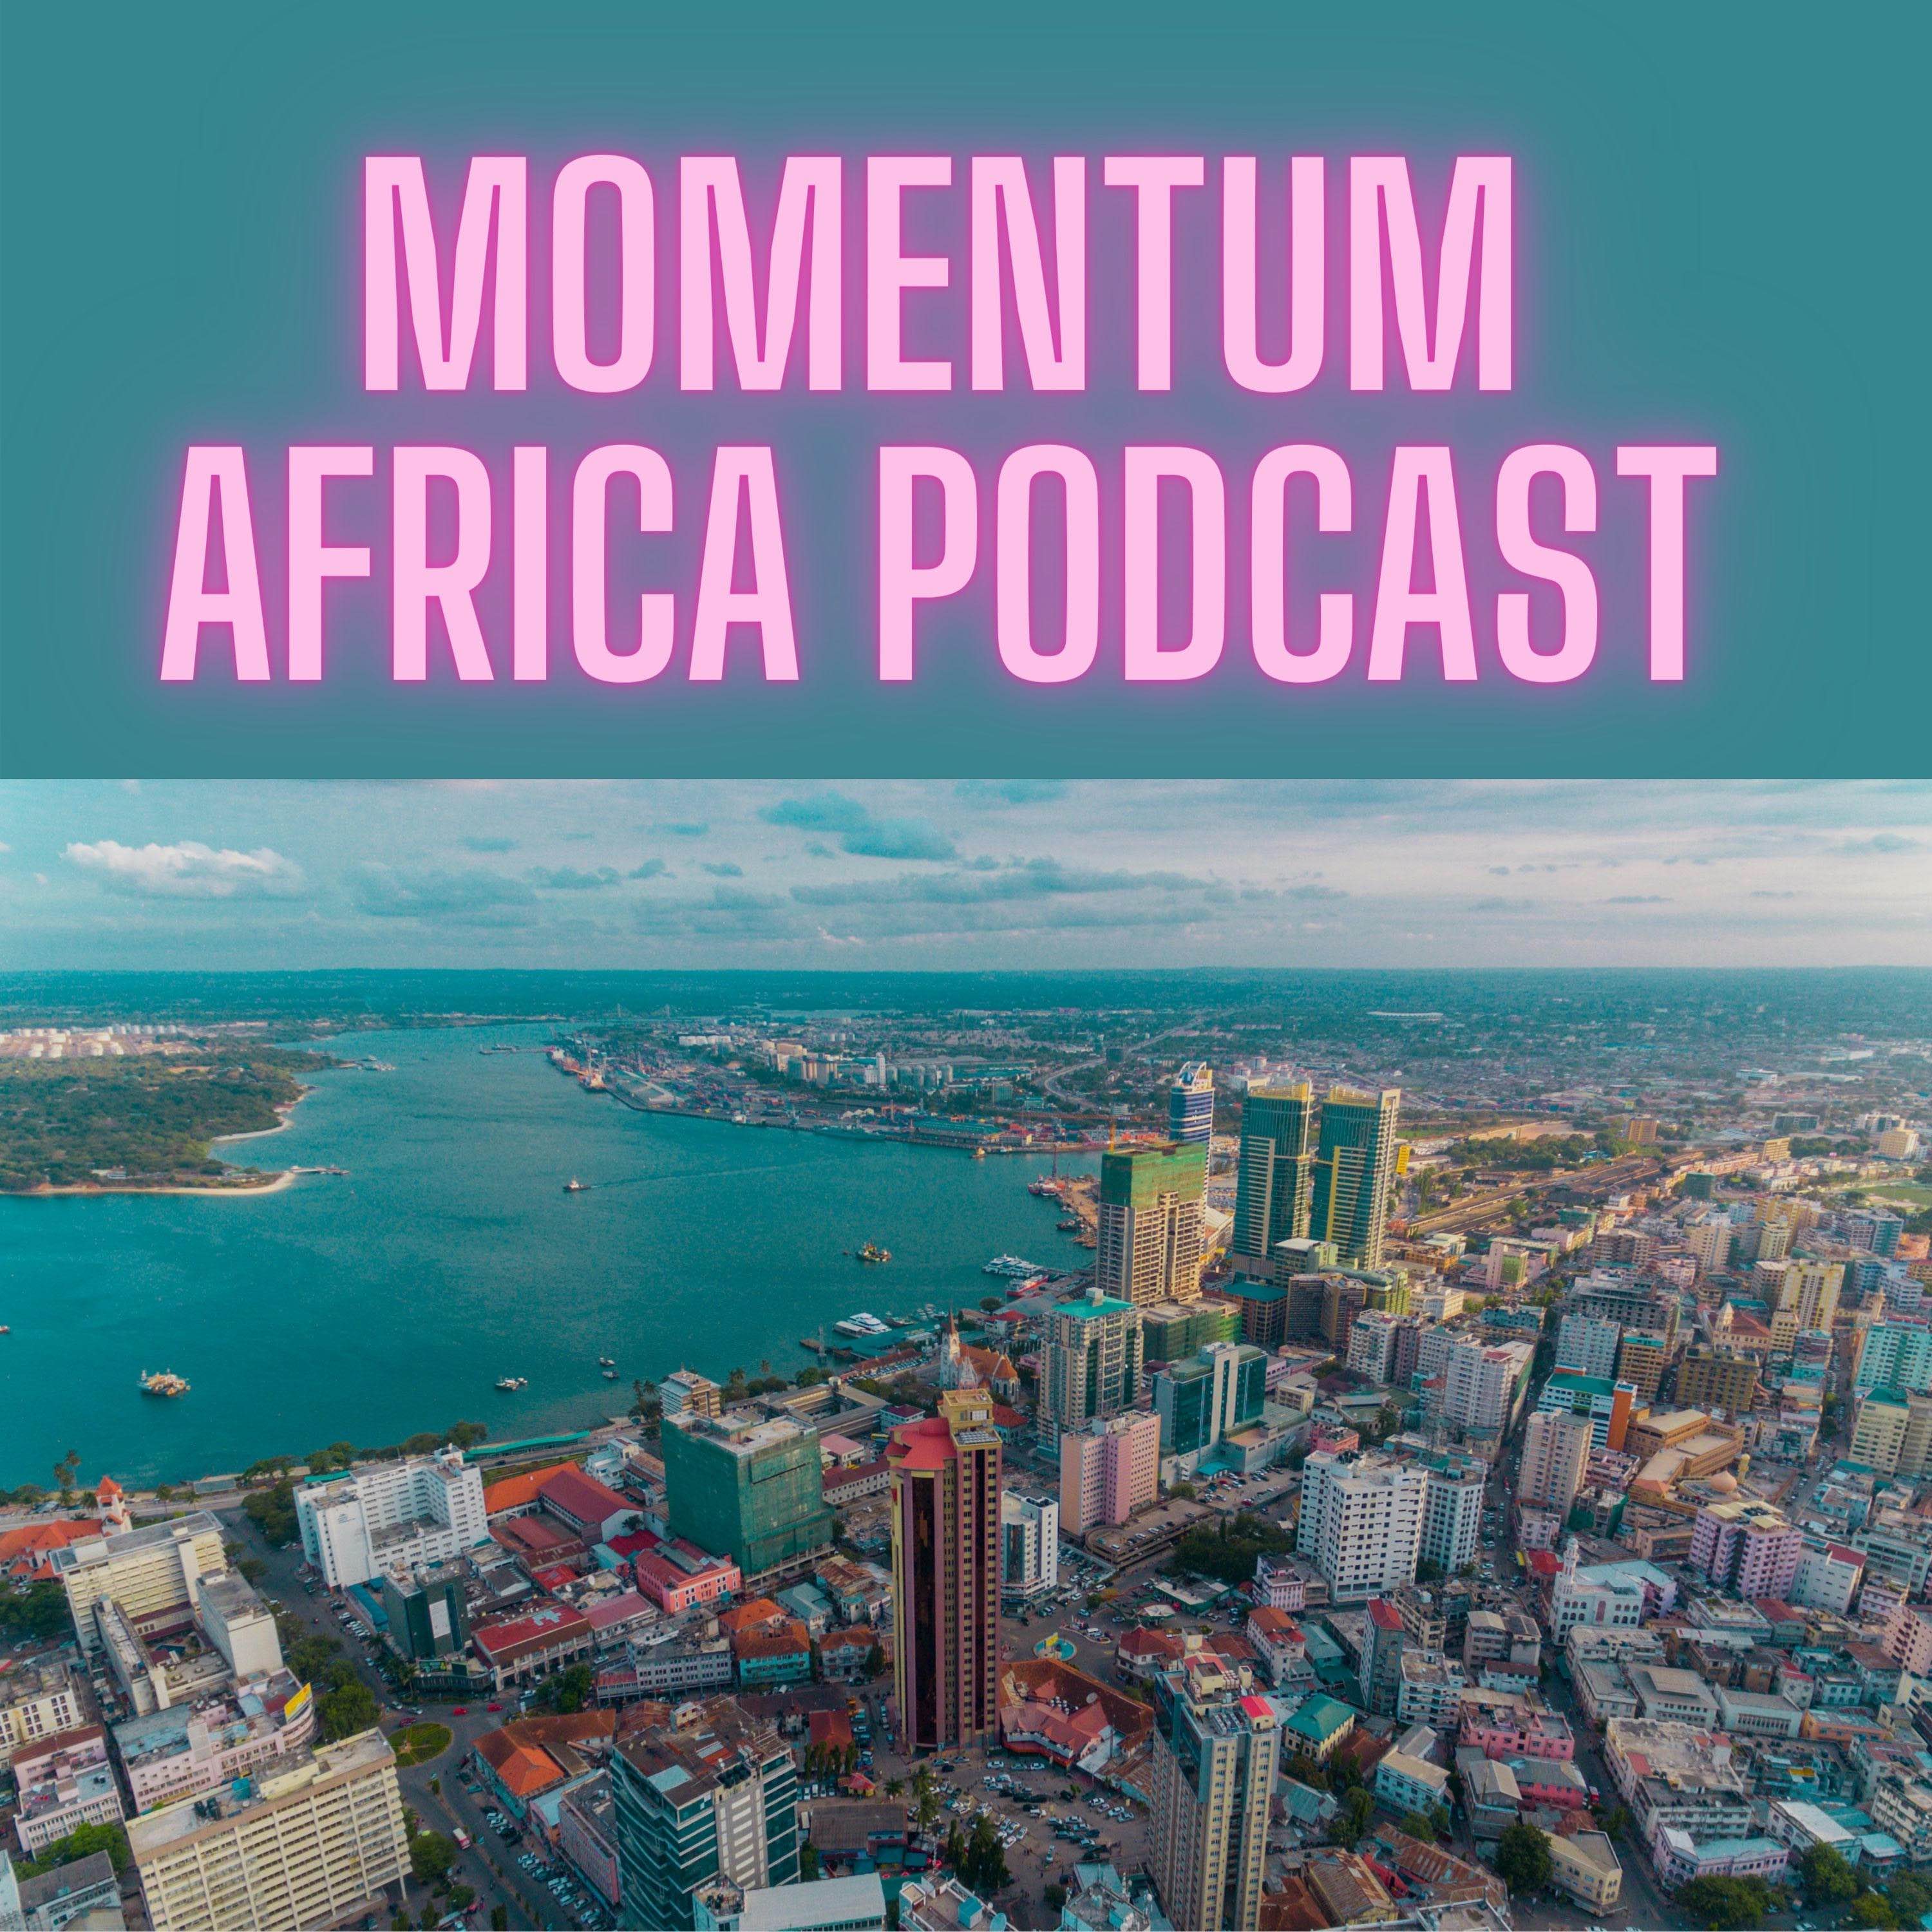 Momentum Africa Podcast